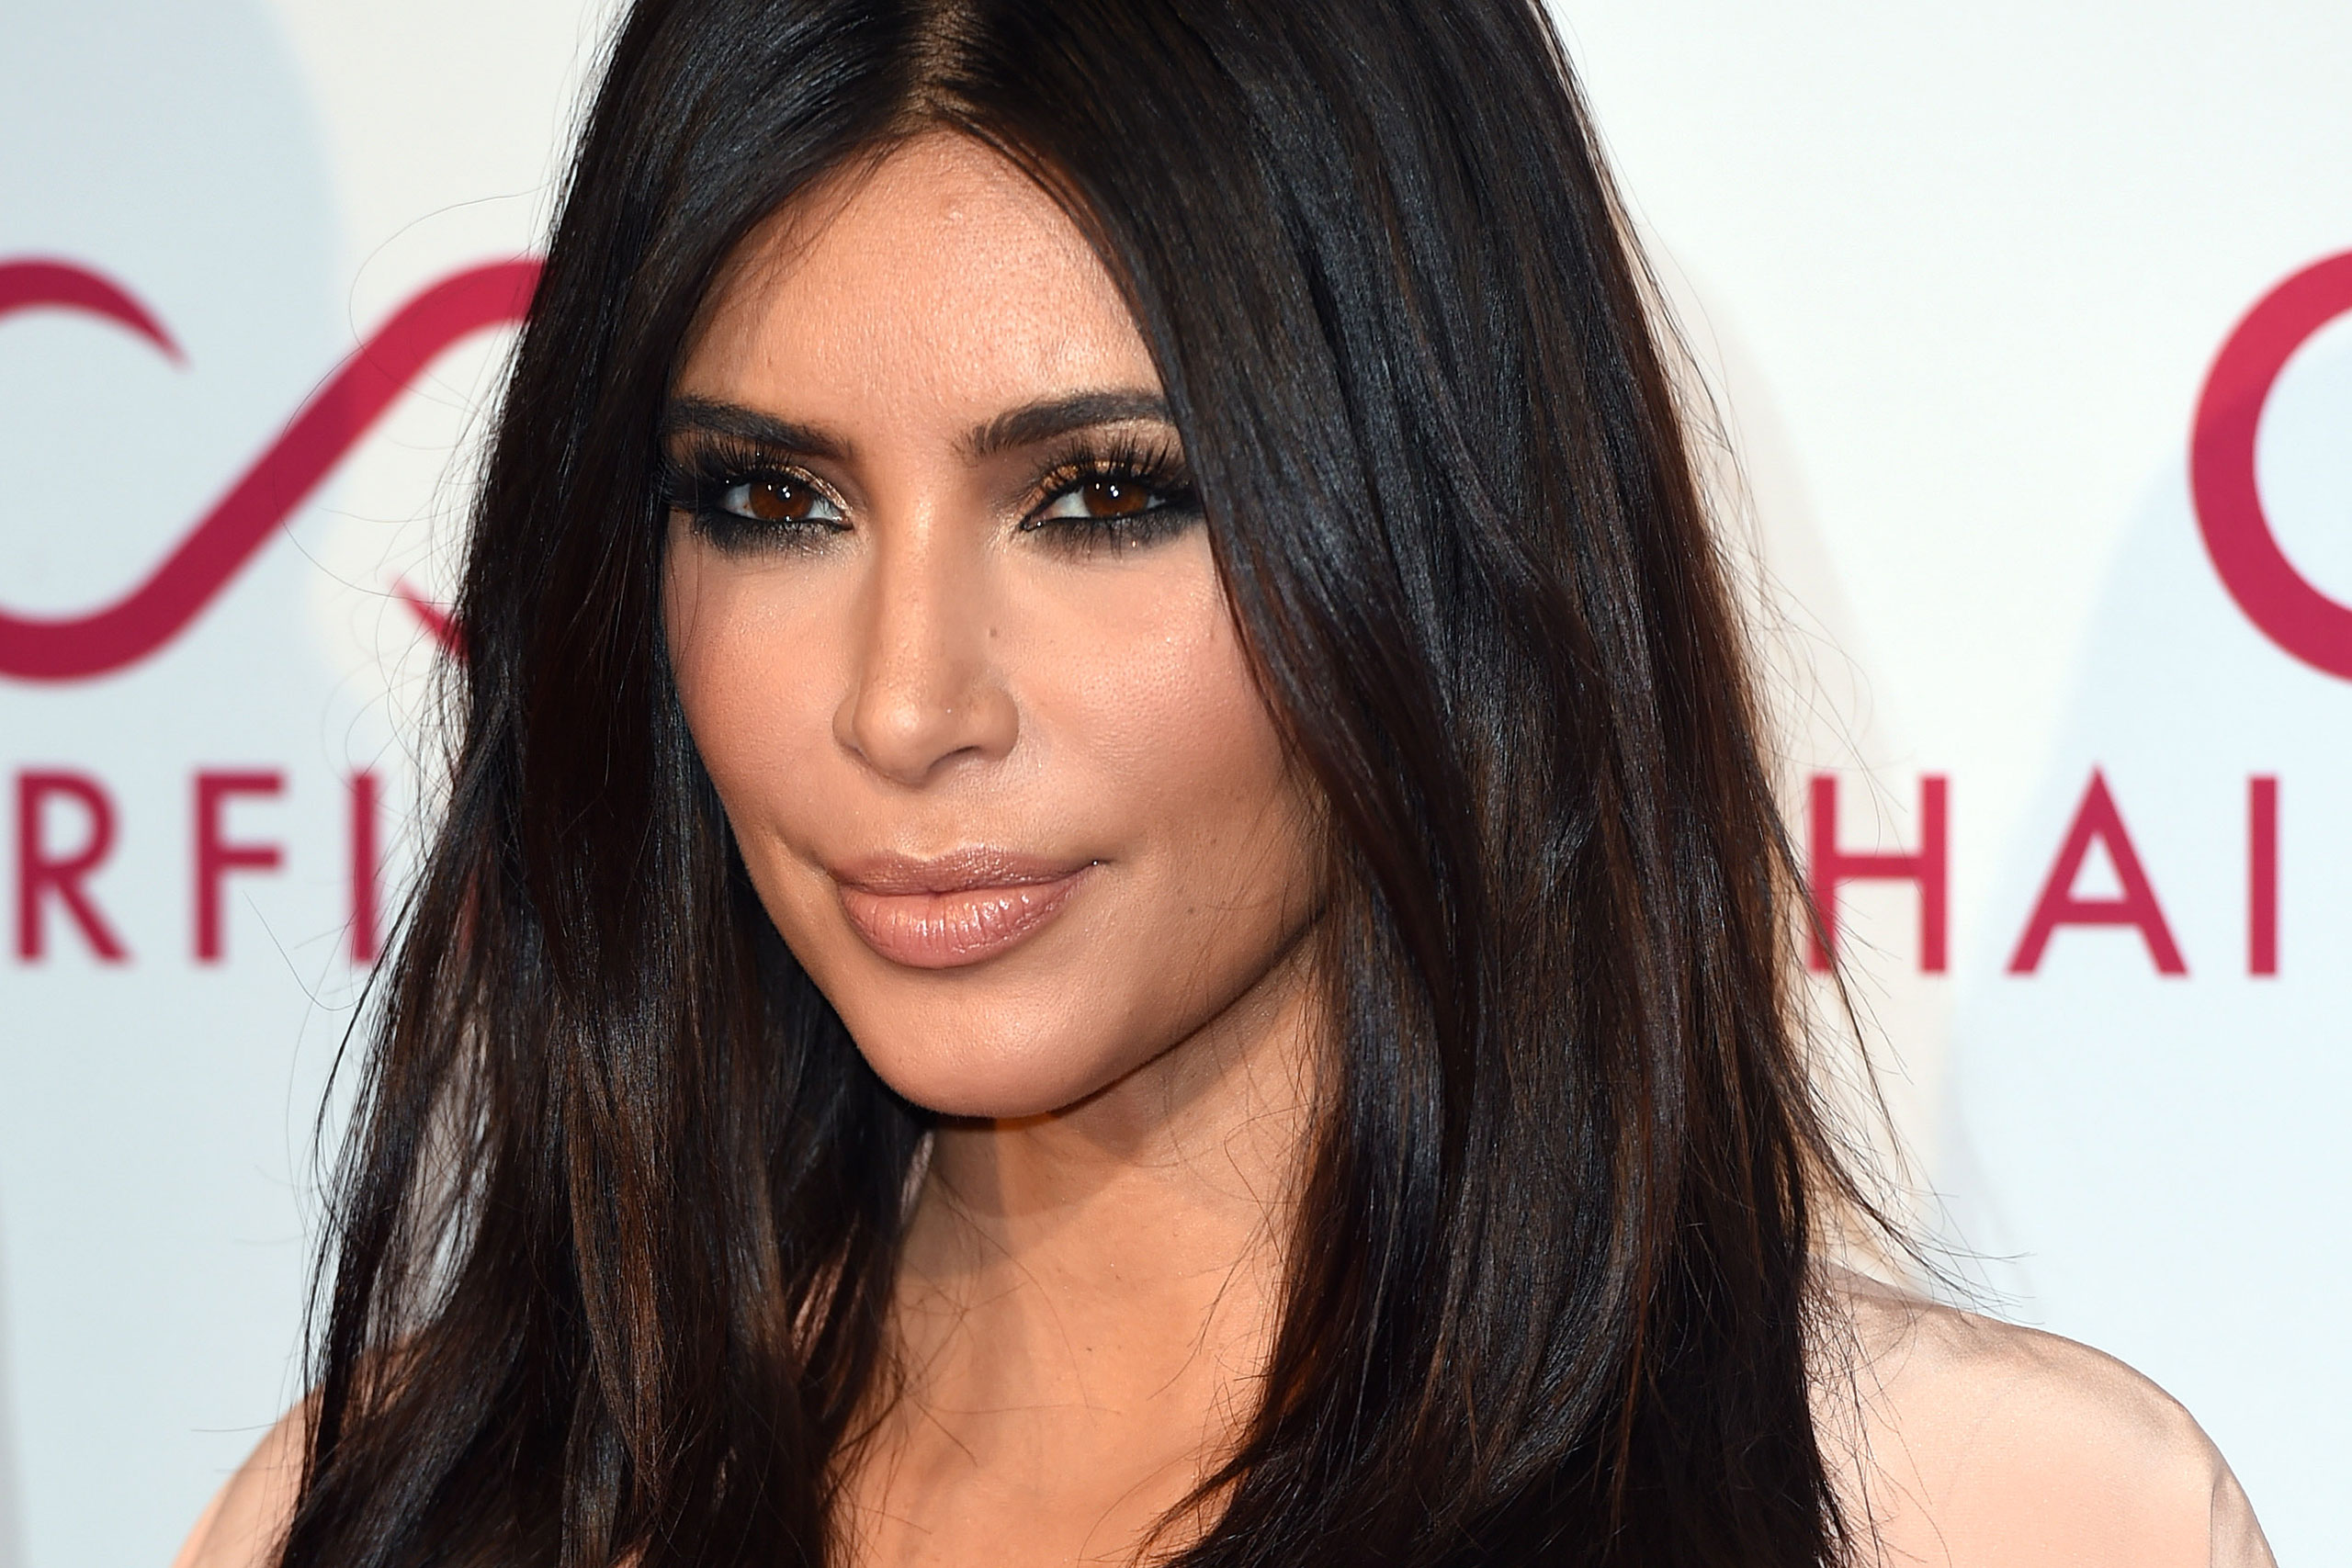 Kim Kardashian attends the Hairfinity UK Launch Party on Nov. 8, 2014 in London.